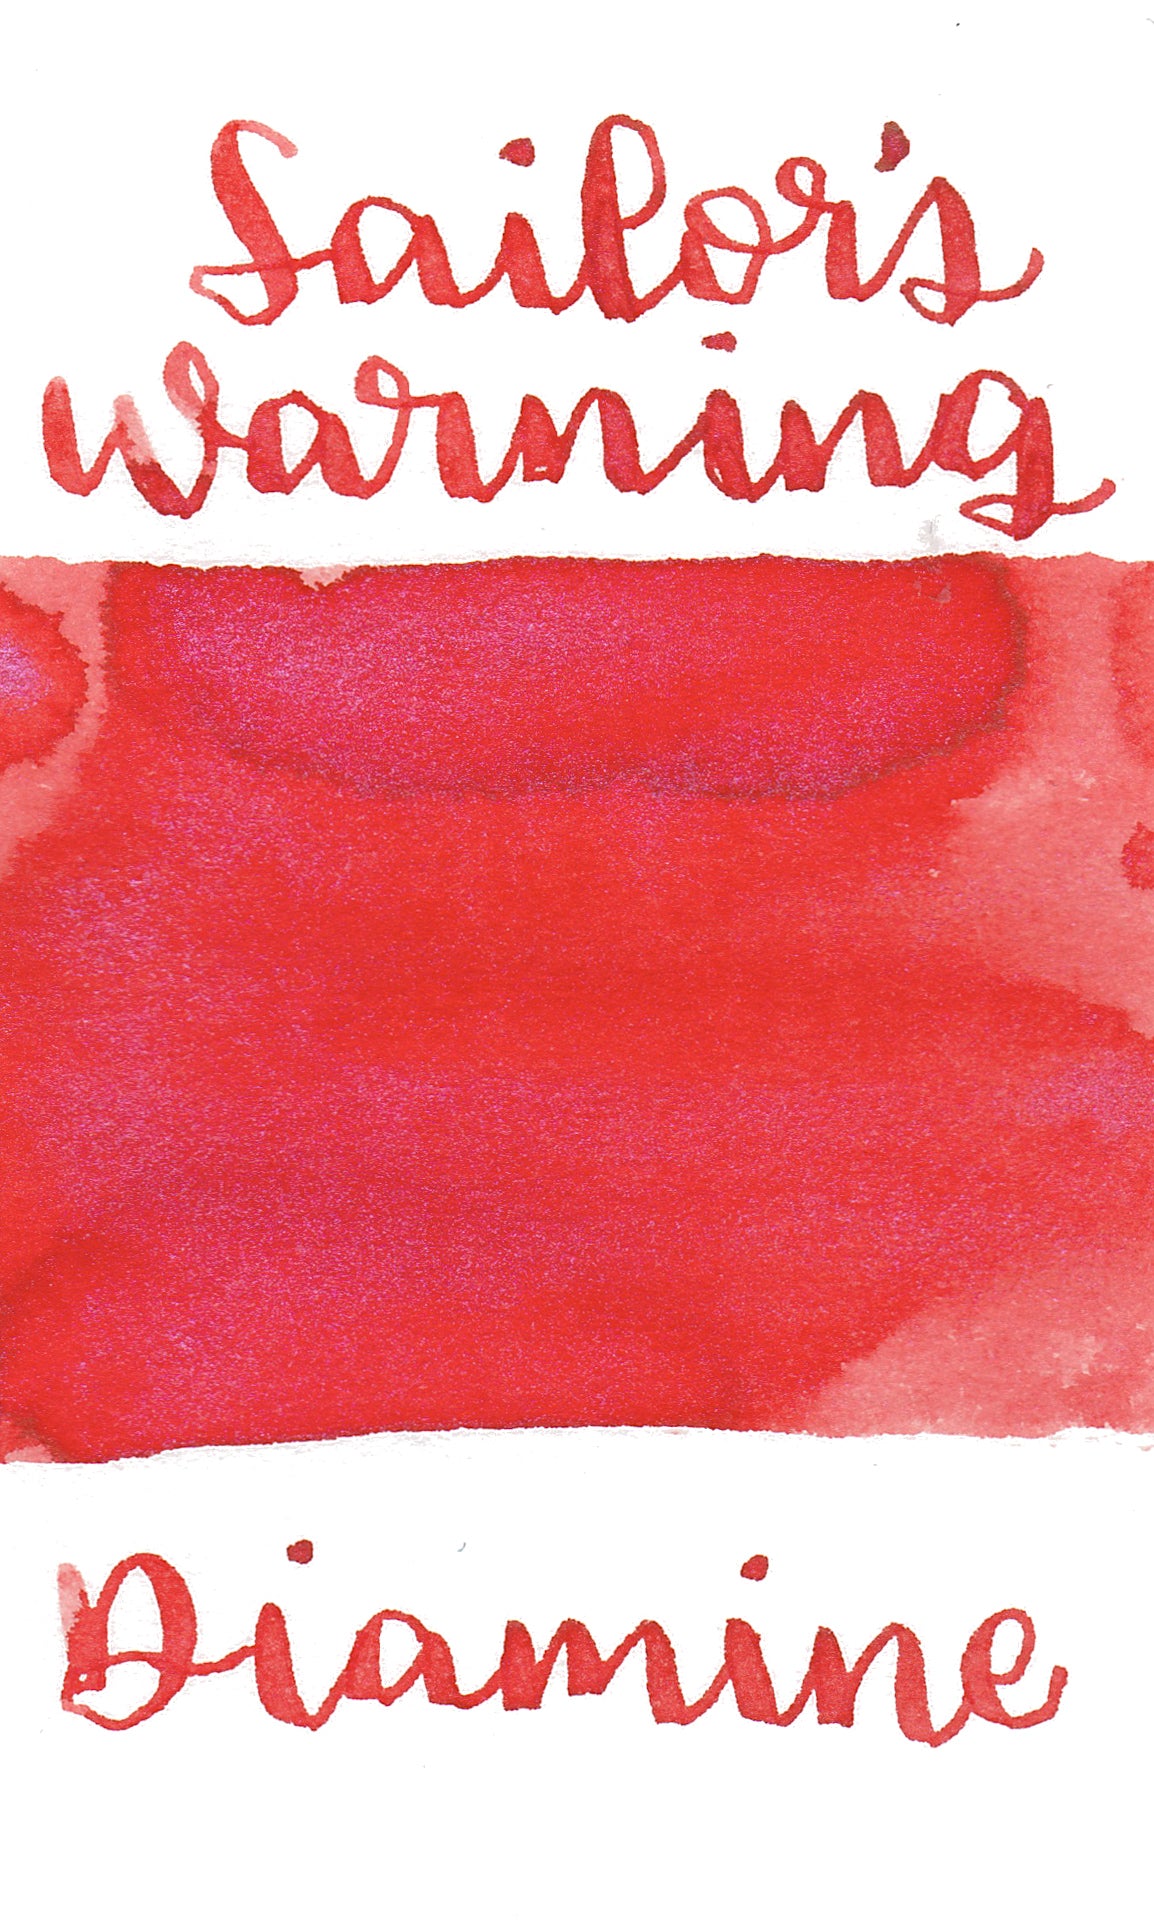 Diamine Shimmer-tastic Red Sky (Sailor's Warning Red) Reddit Ink Project